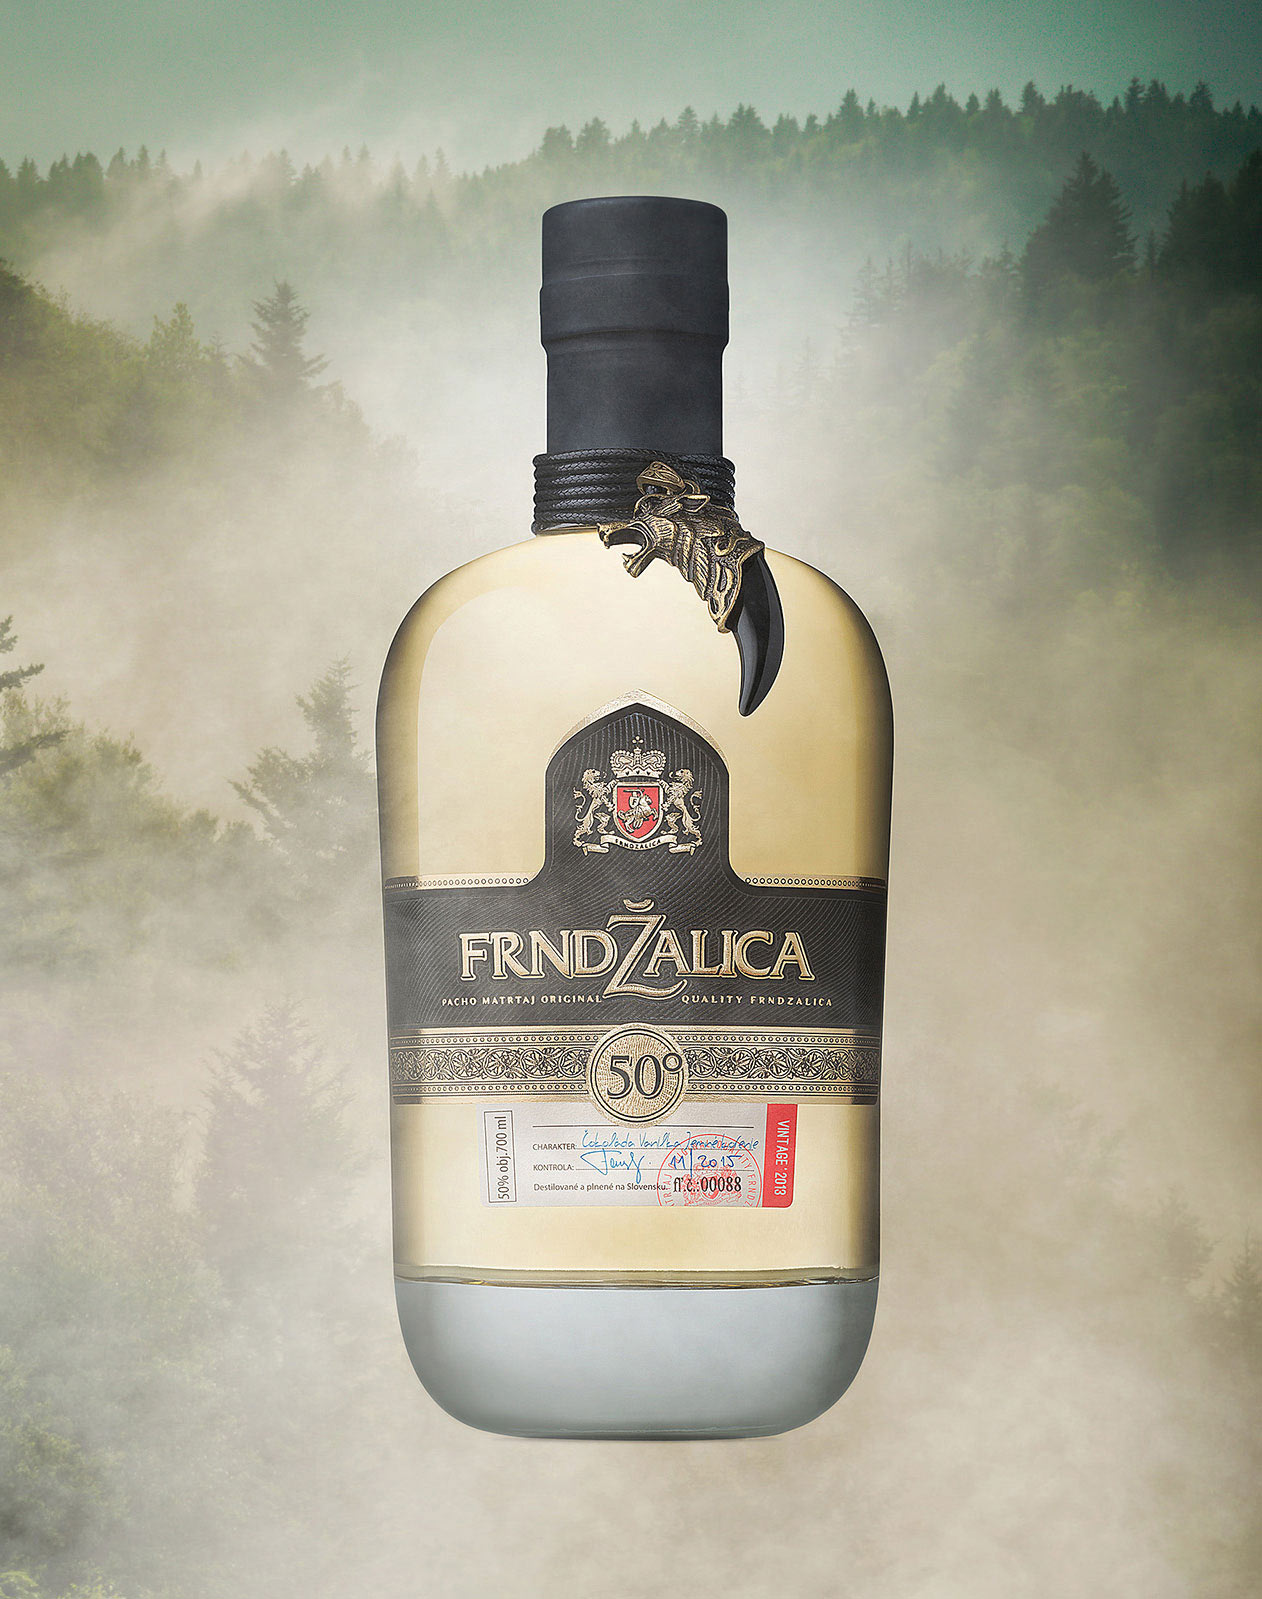 Frndzalica liquor product photography | BOLD Digital